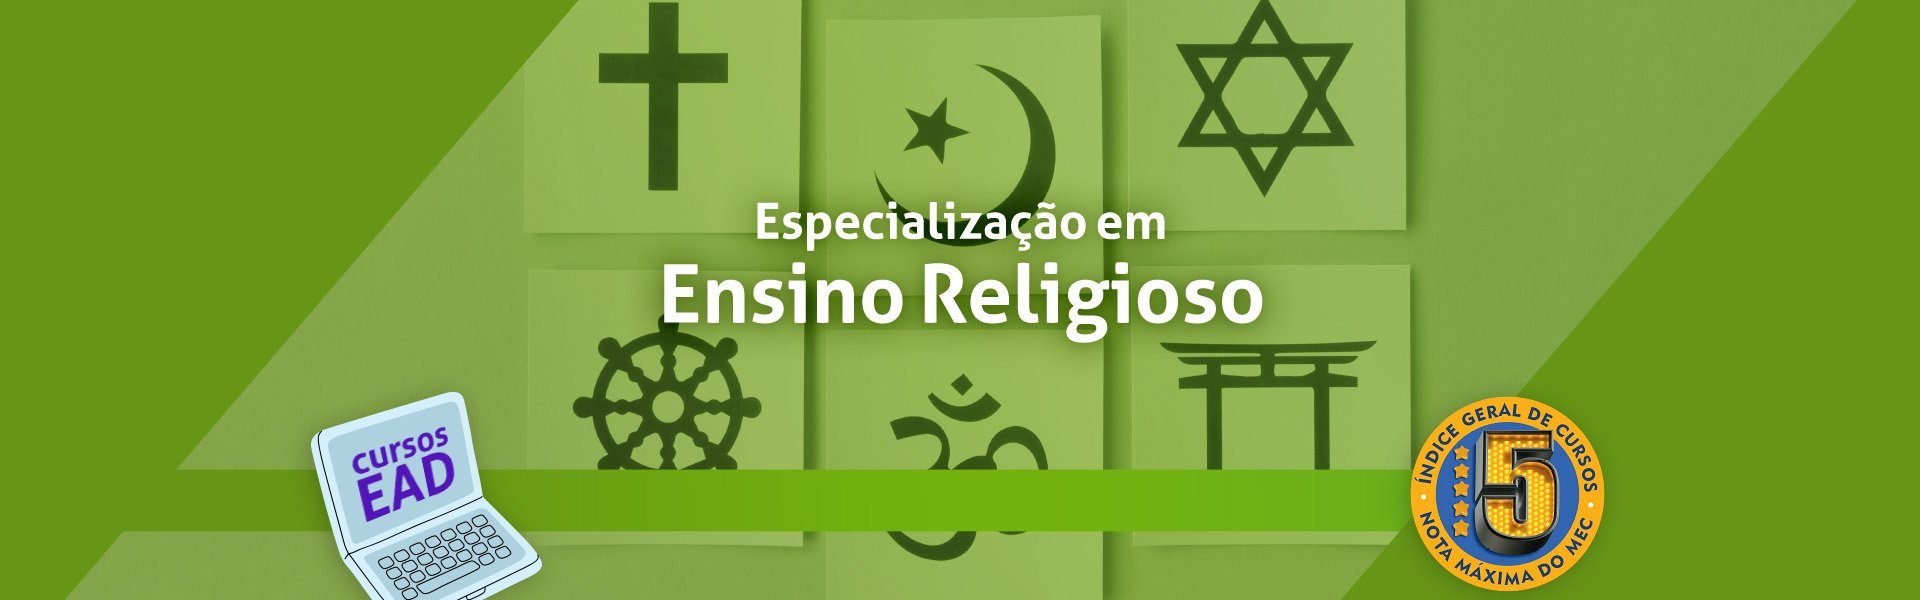 FE 009 24 - Banner SITE Ensino Religioso EAD